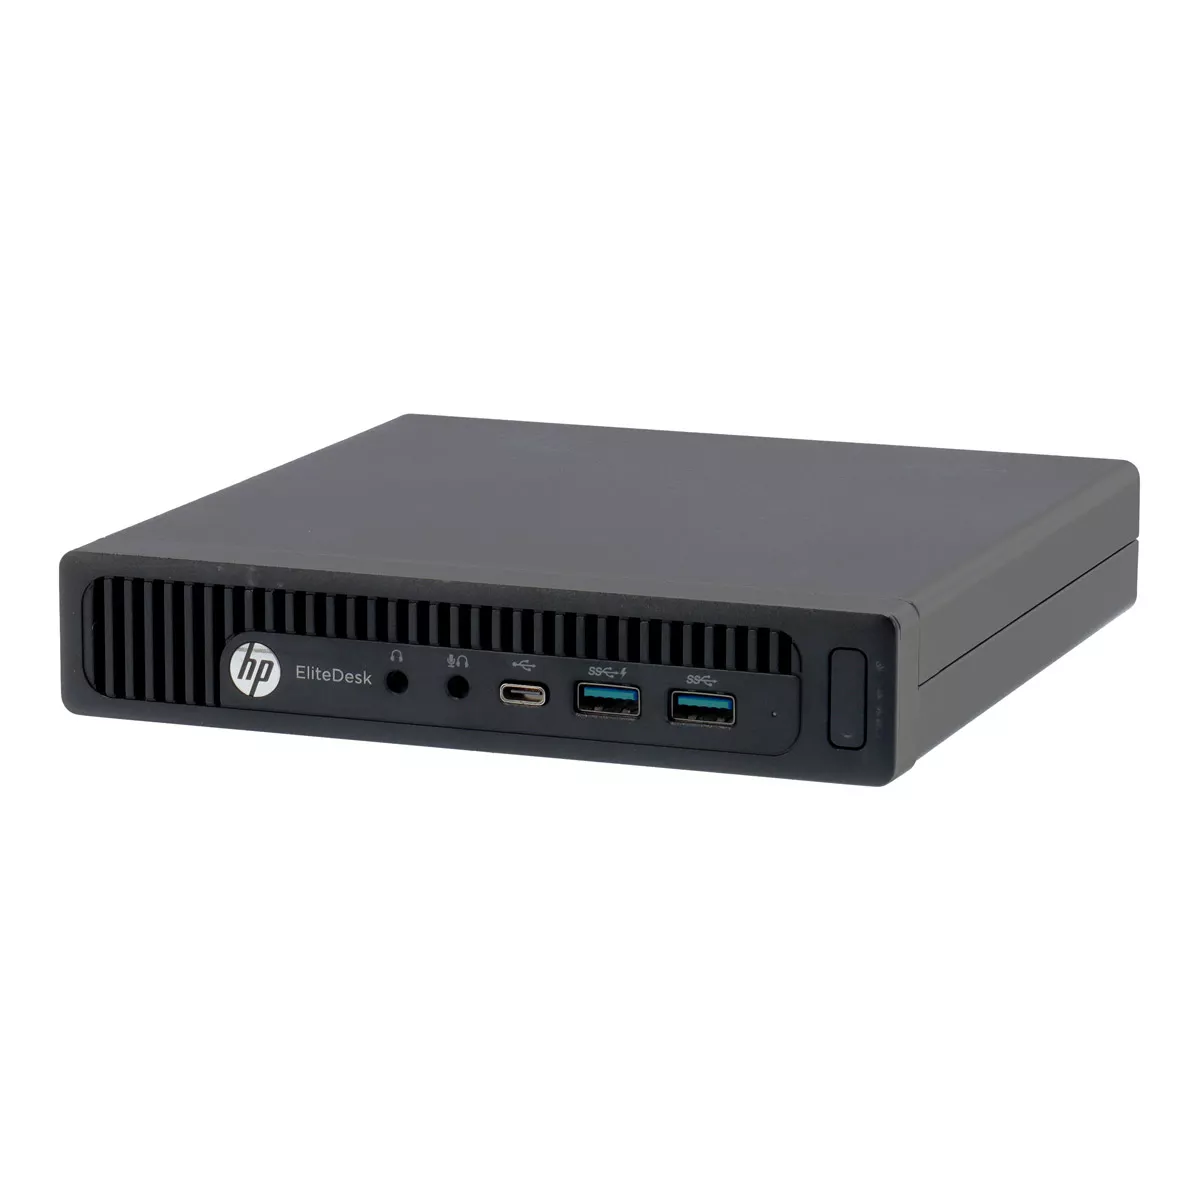 HP EliteDesk 800 G2 Mini Core i5 6500 3,20 GHz 240 GB SSD A+